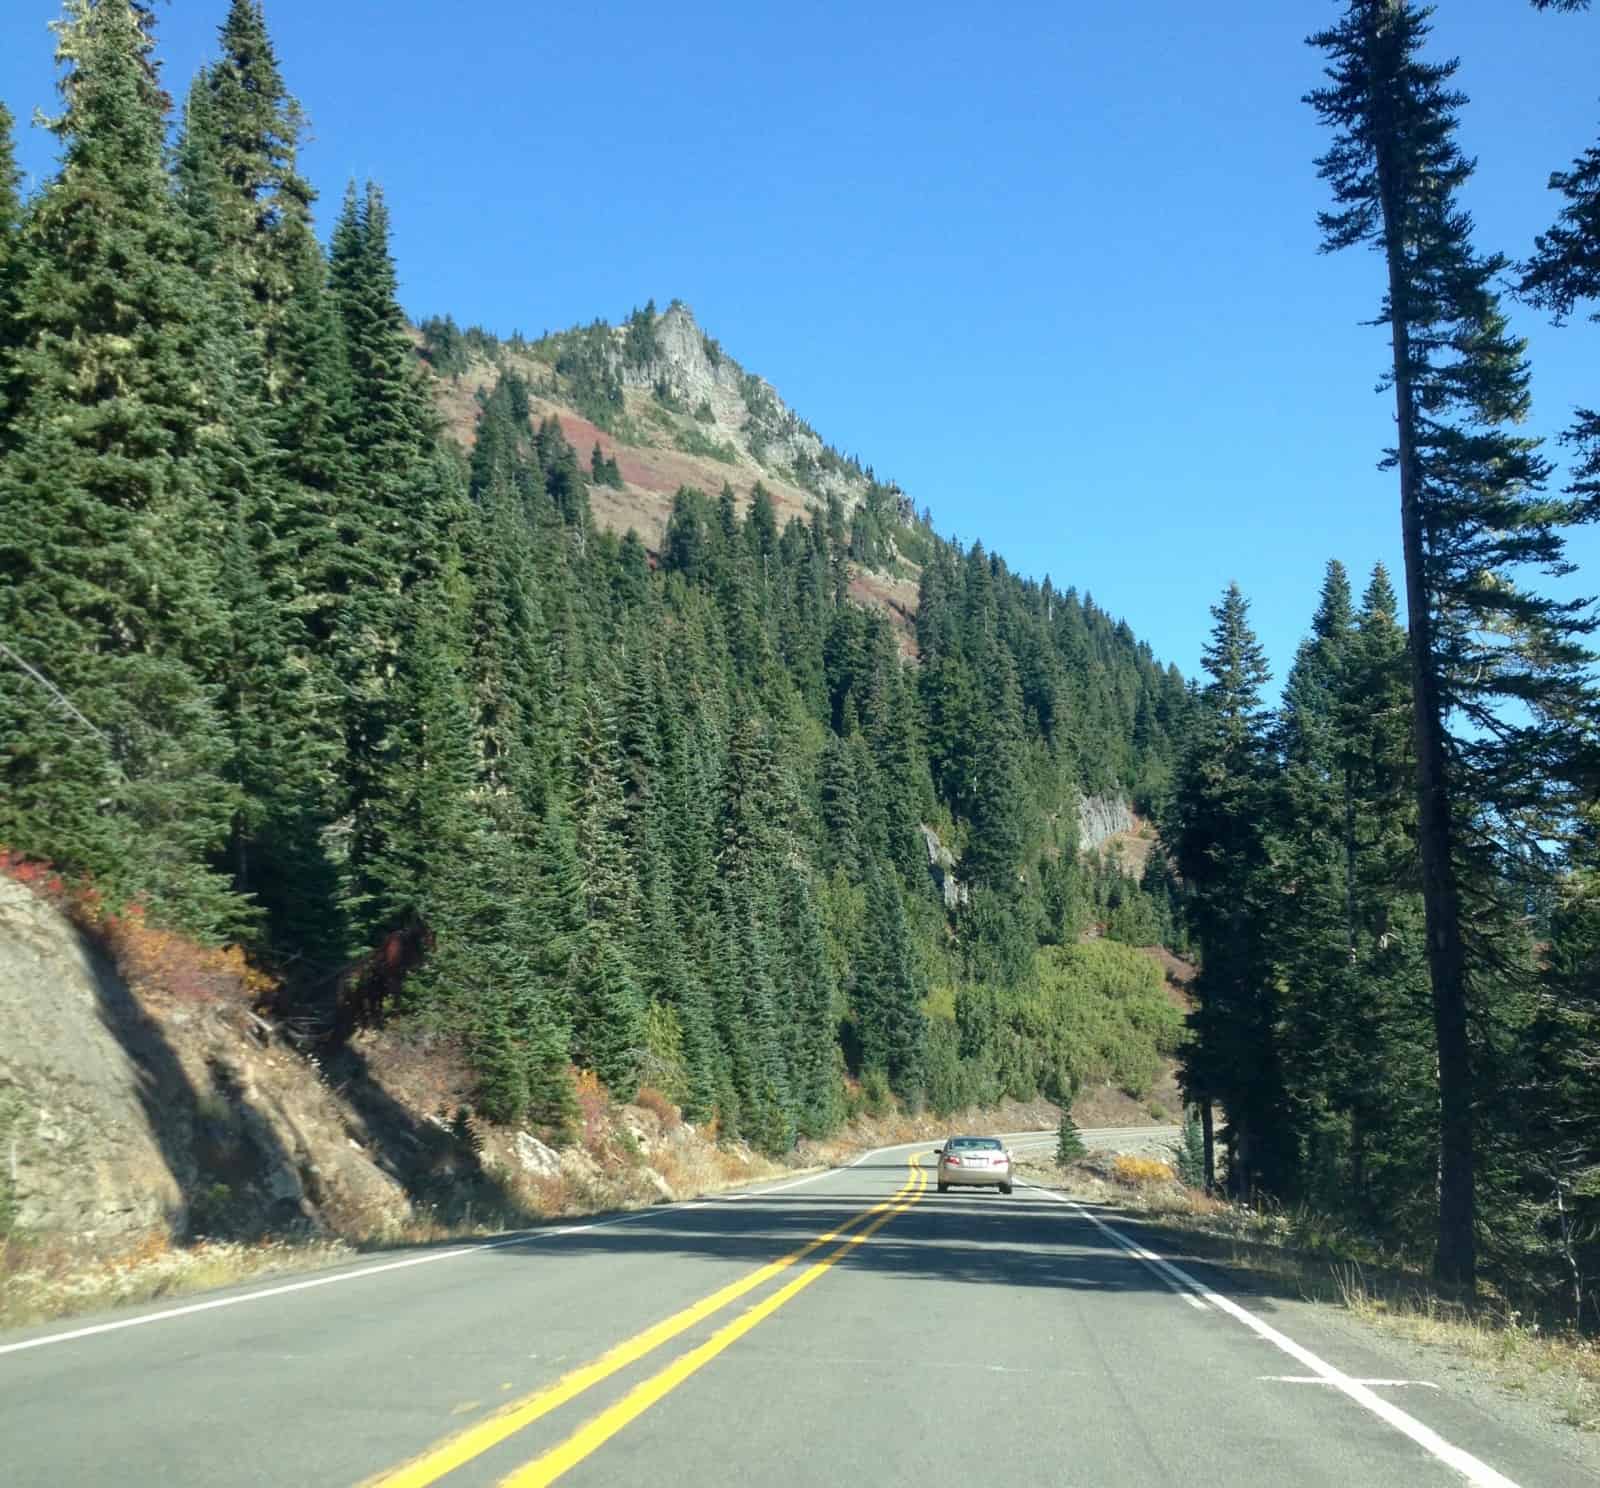 Enjoy a Scenic Drive Around Mt. Rainier This Fall